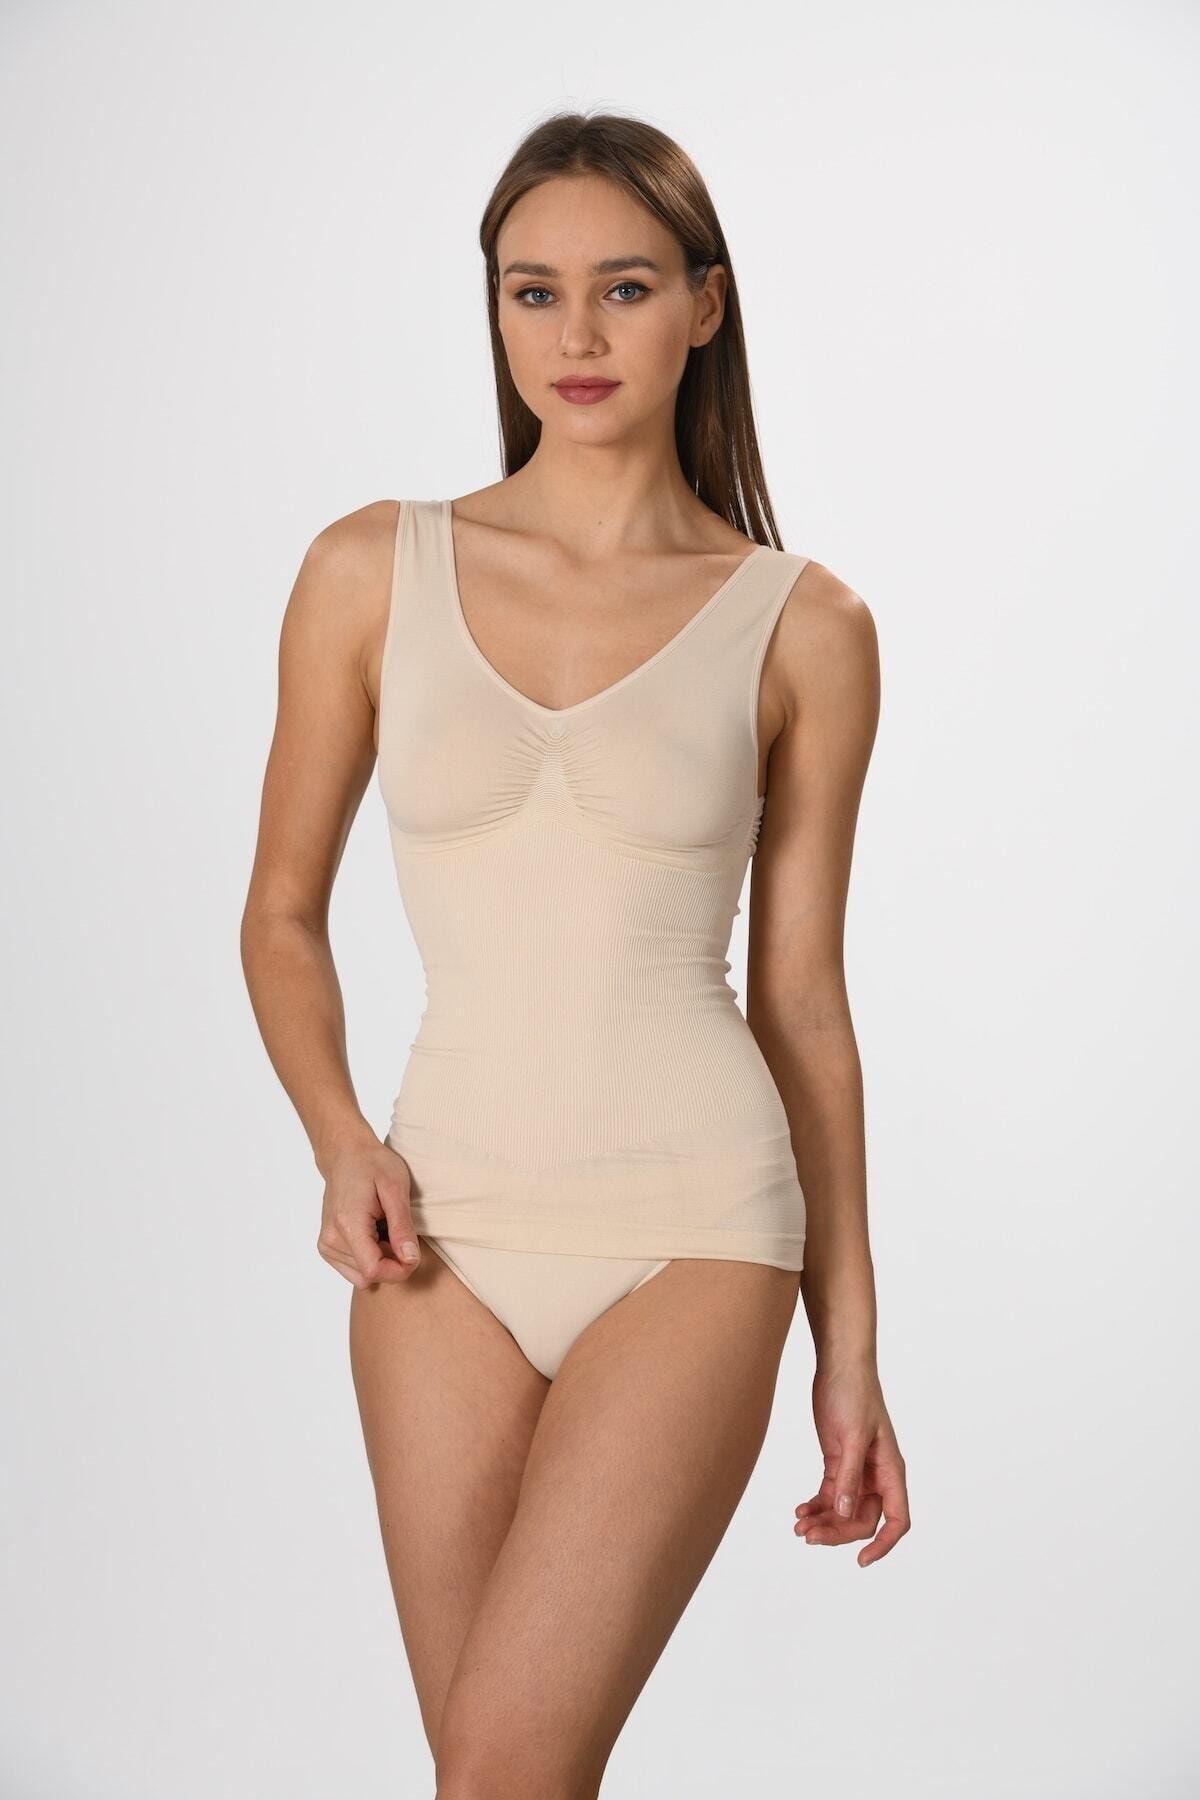 Miss Fit Body Korse Seamless Body Shaper Underwear - 1255 – Shezaib